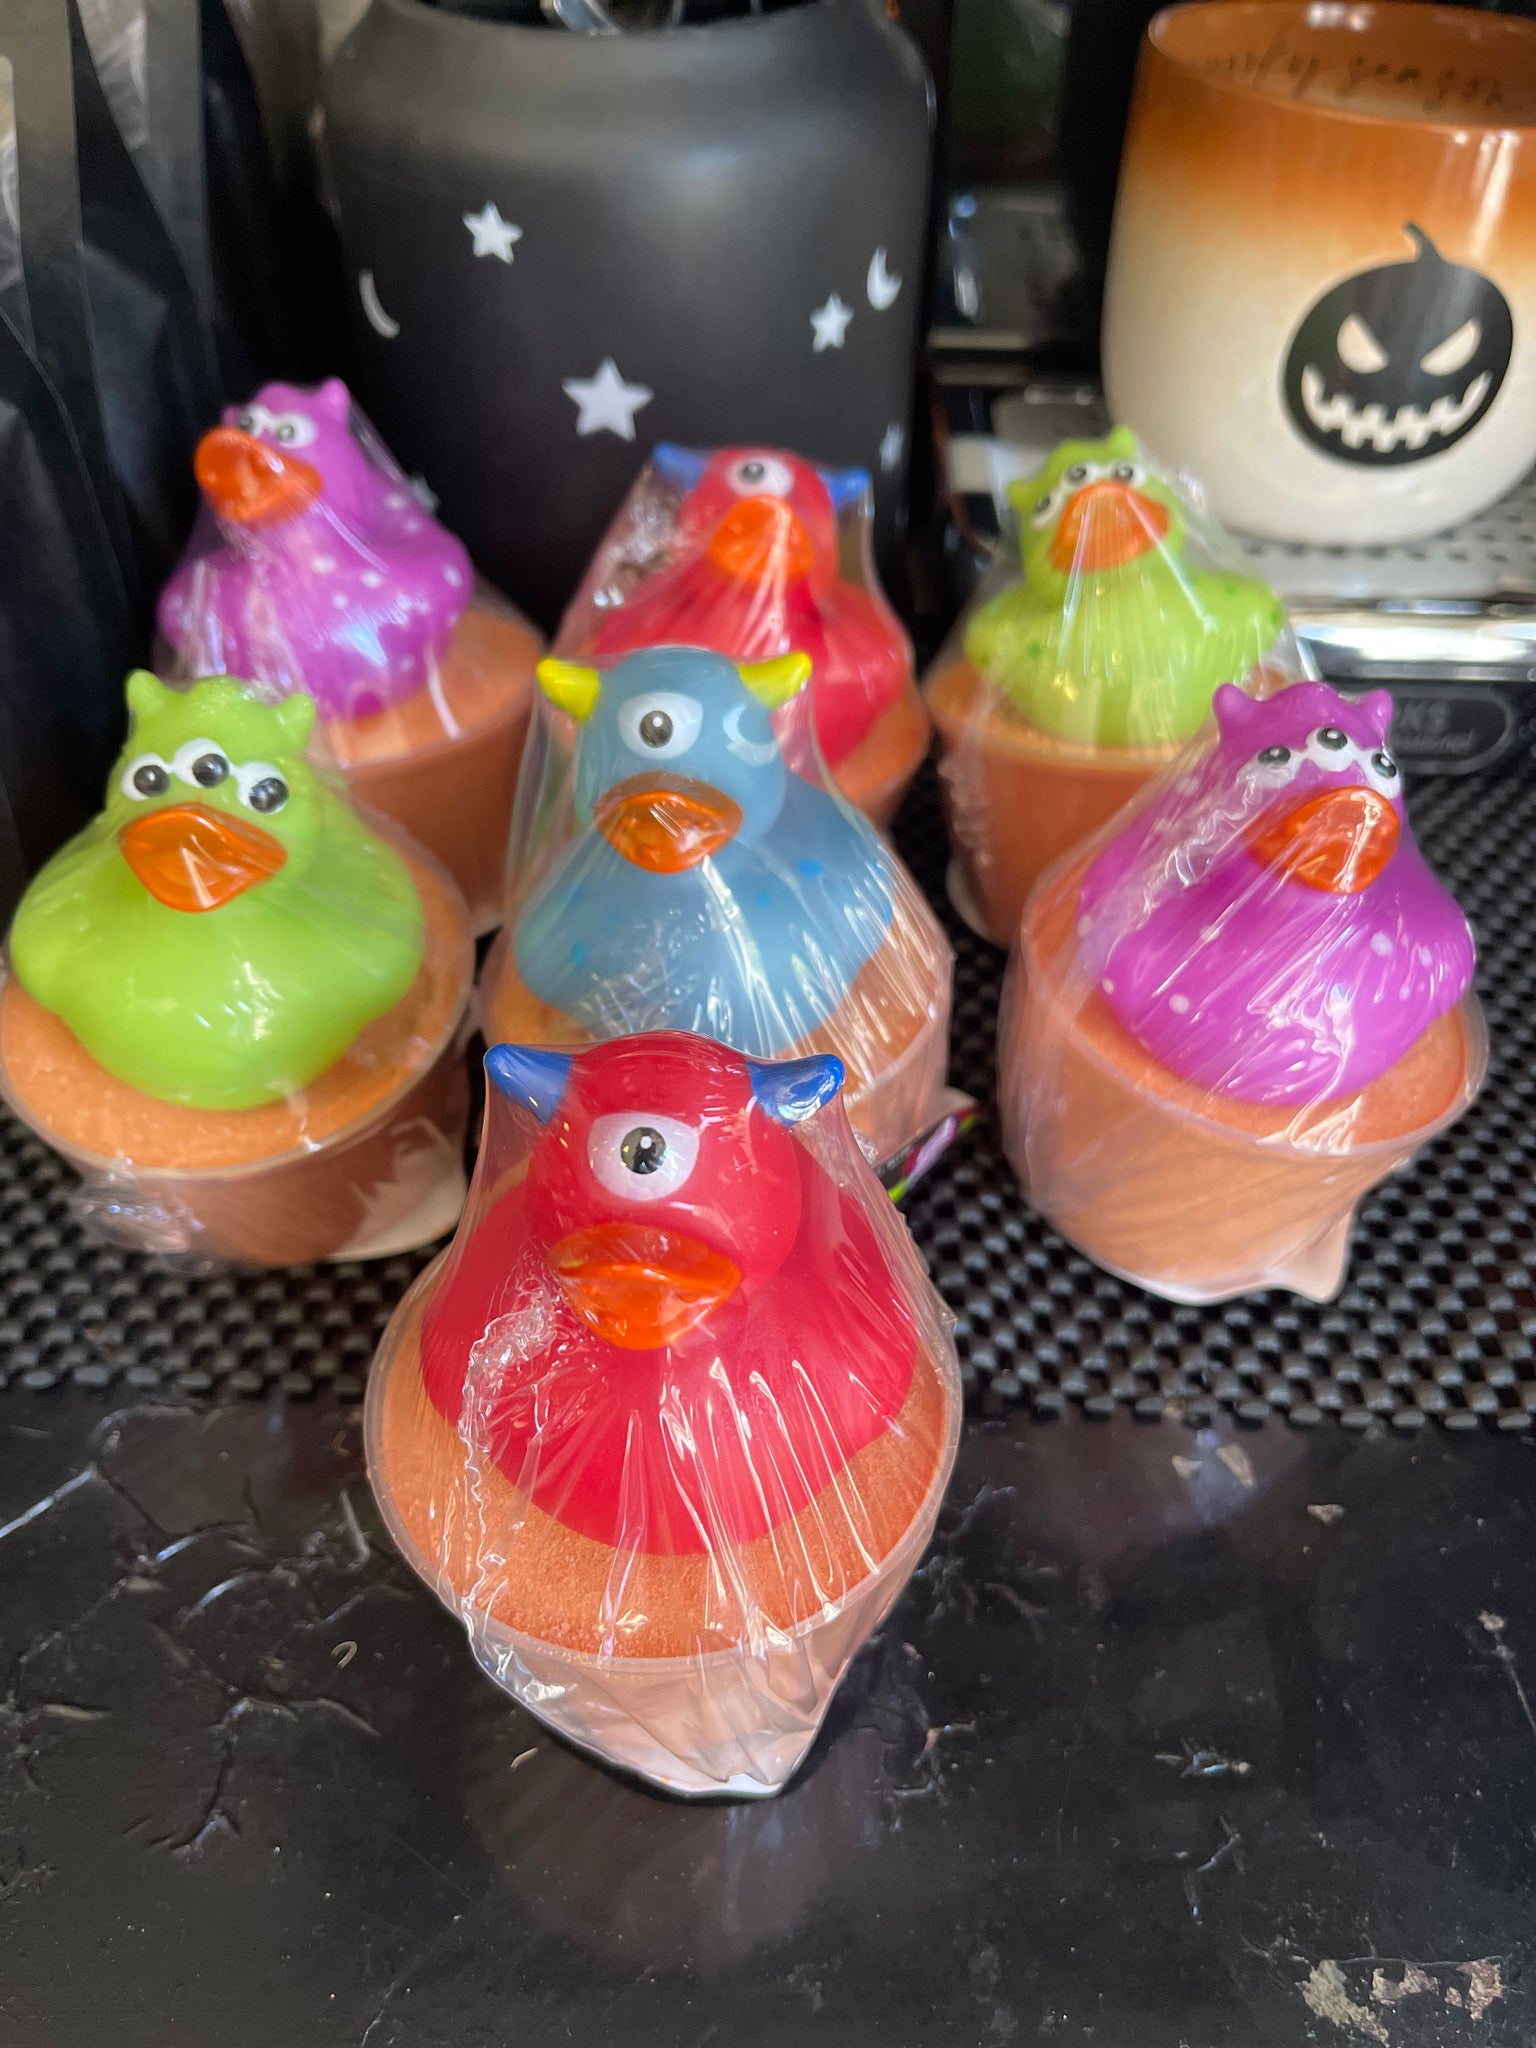 Hex kids hallowfest samhain orange Hexbomb with monster duck